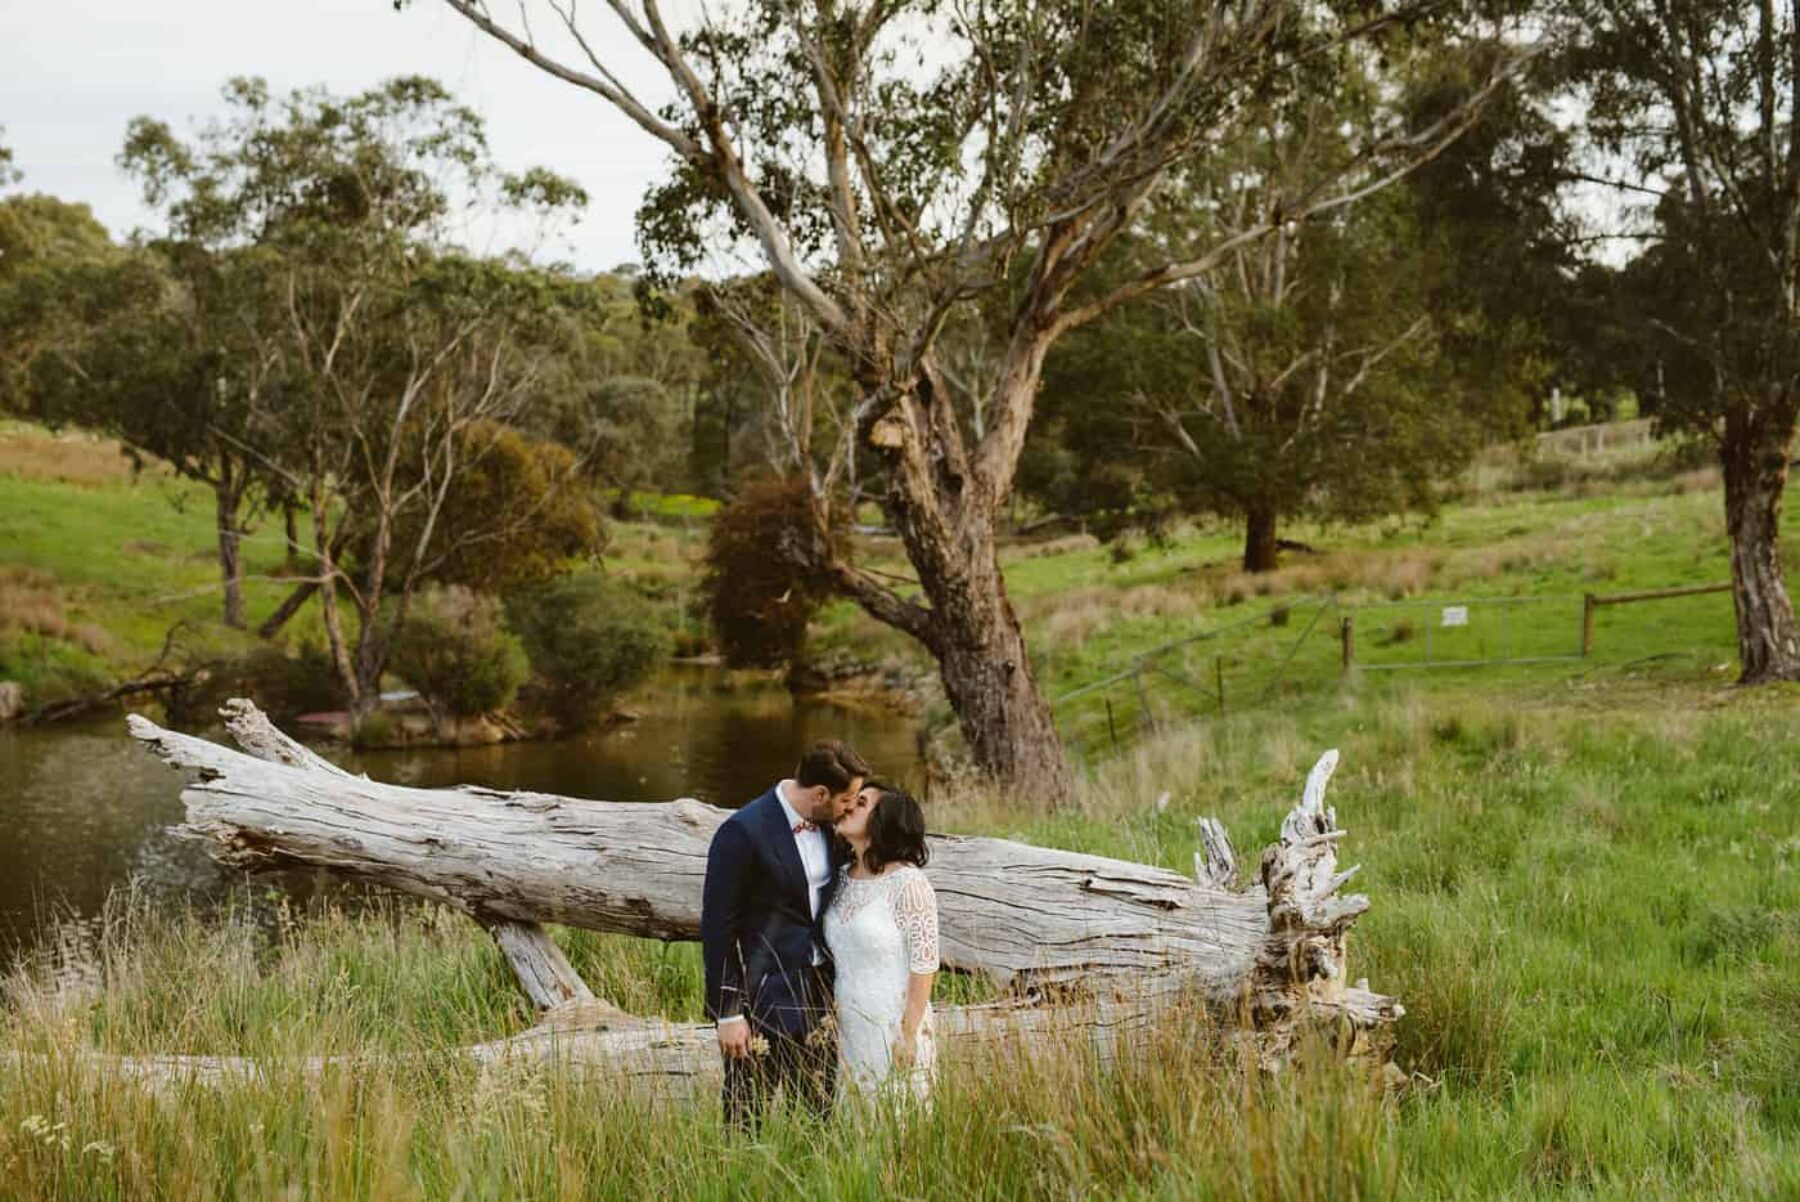 Rustic wedding at The Farm Yarra Valley - photography by Motta Weddings